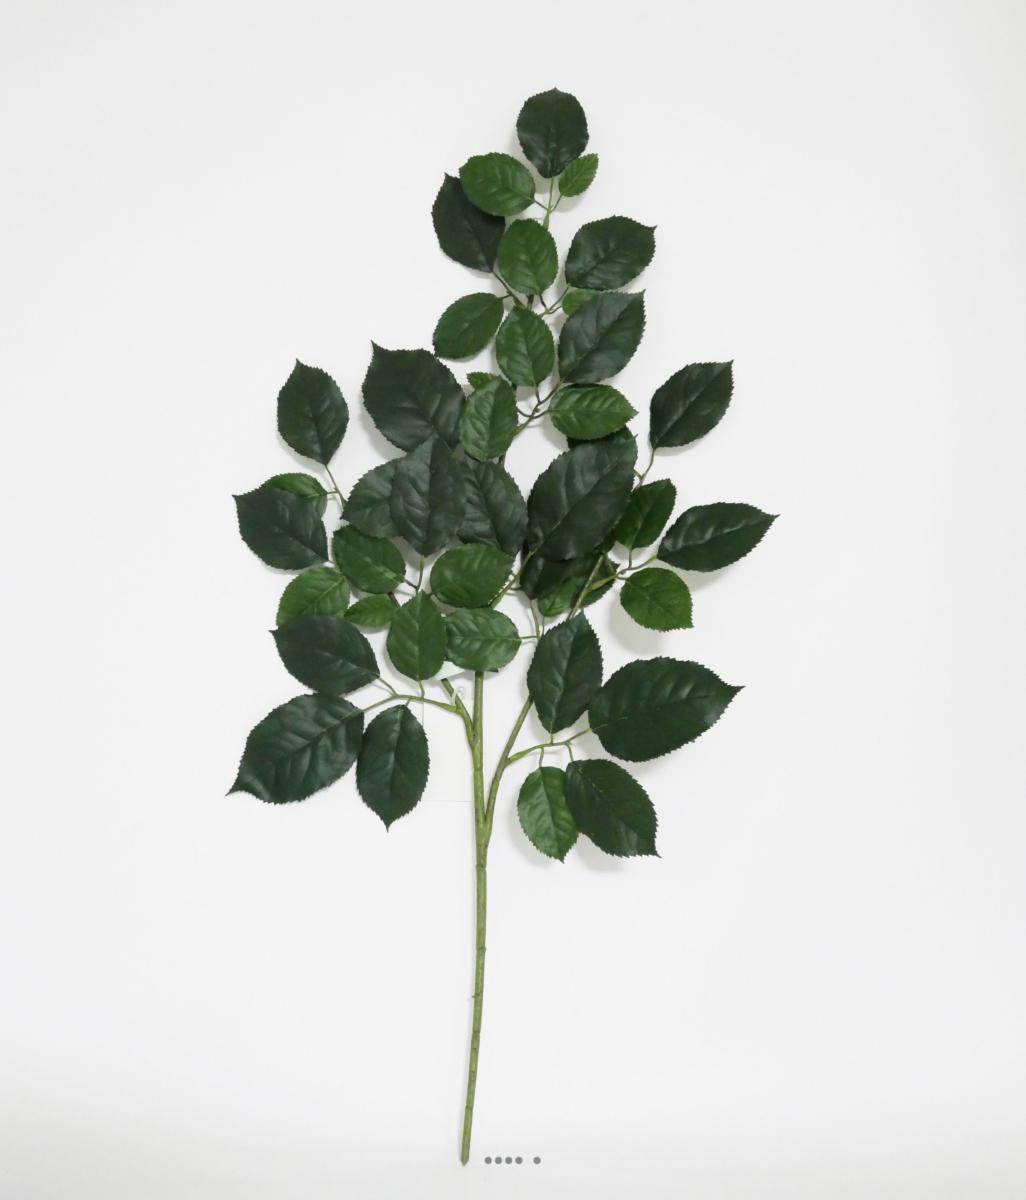 Artificielle cotinuszweig h:41cm Art Branche Art Plante dekopflanze verte branche